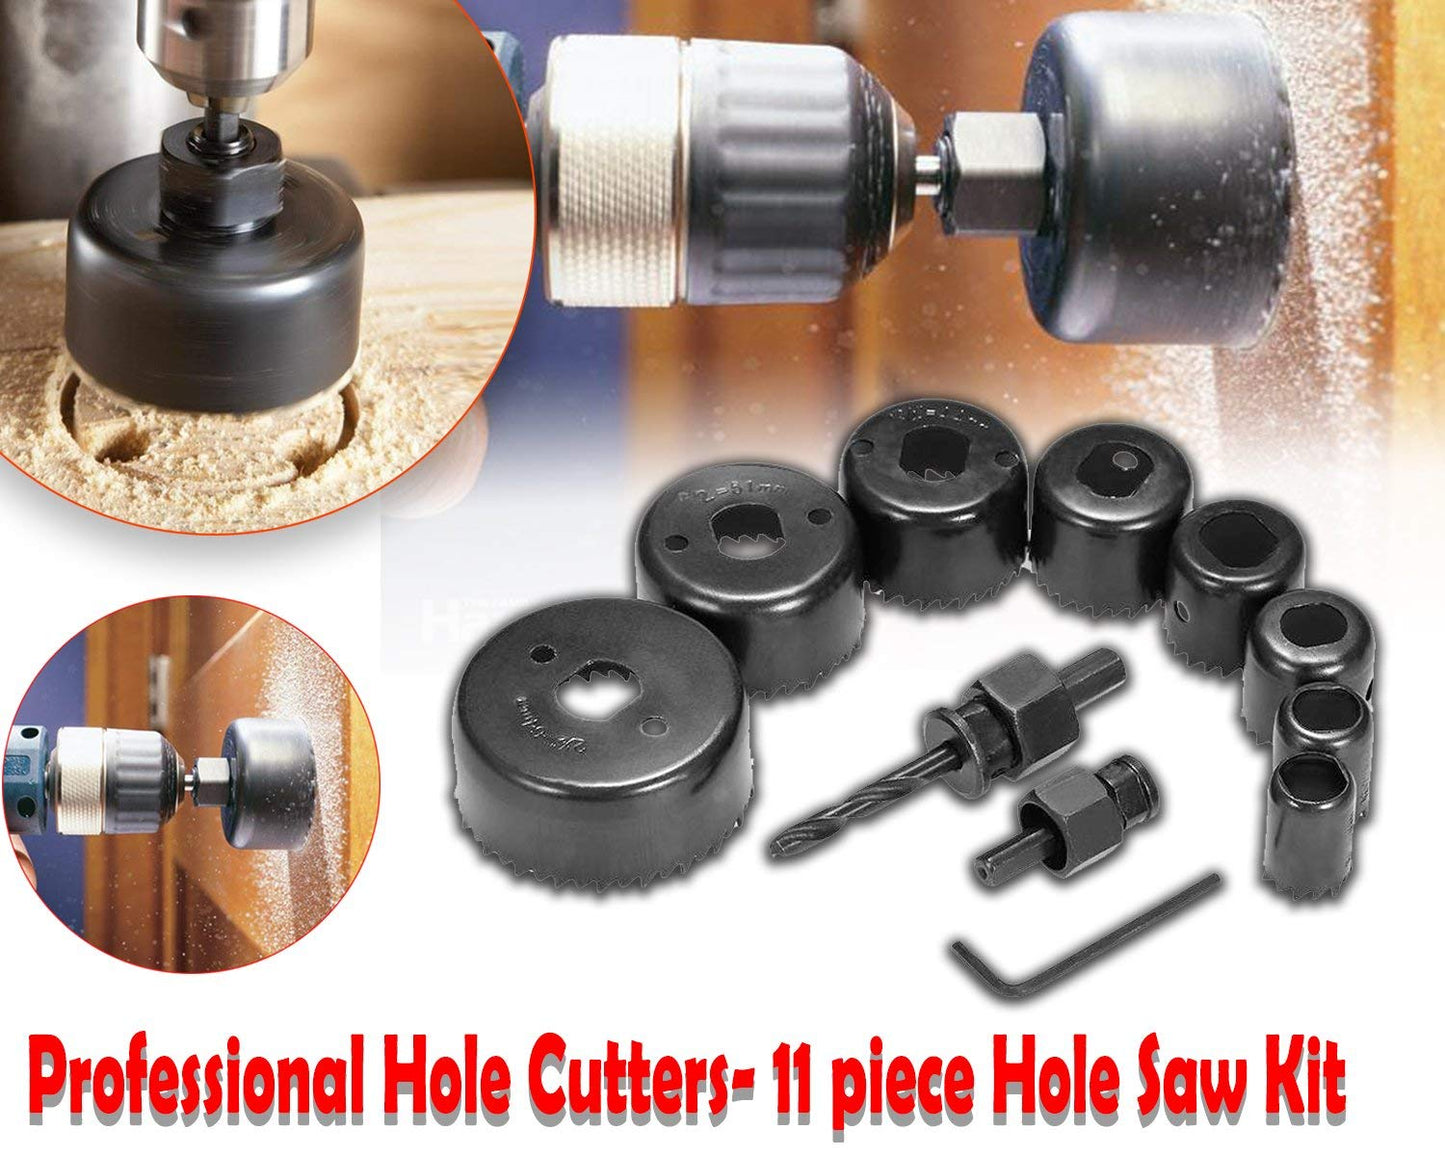 Hole Cutter 11 Piece